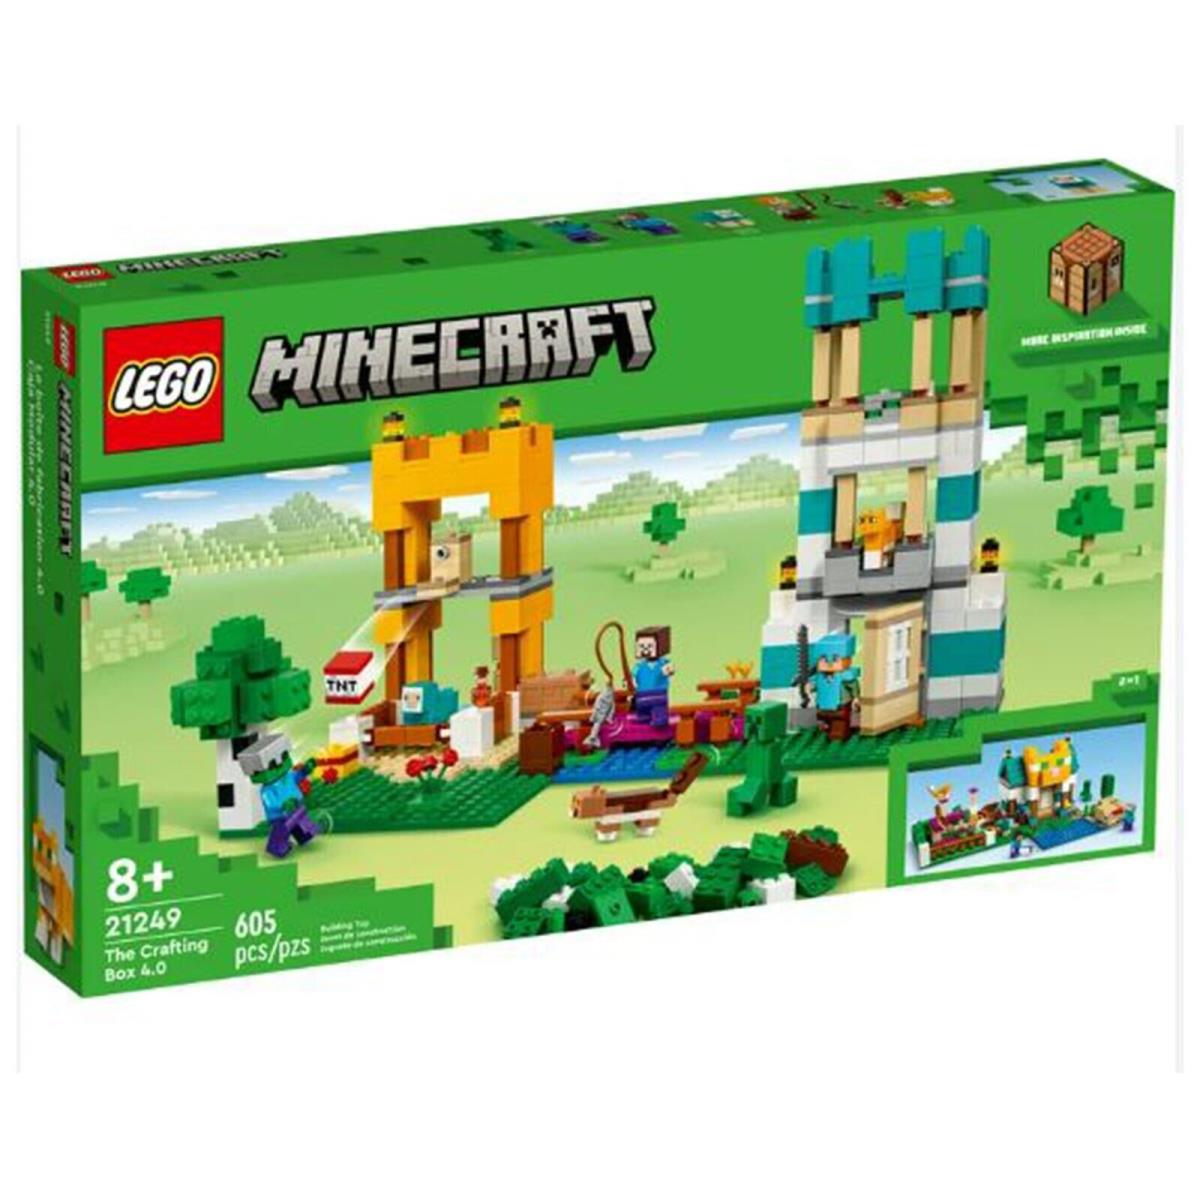 Lego Minecraft The Crafting Box 4.0 Building Set 21249